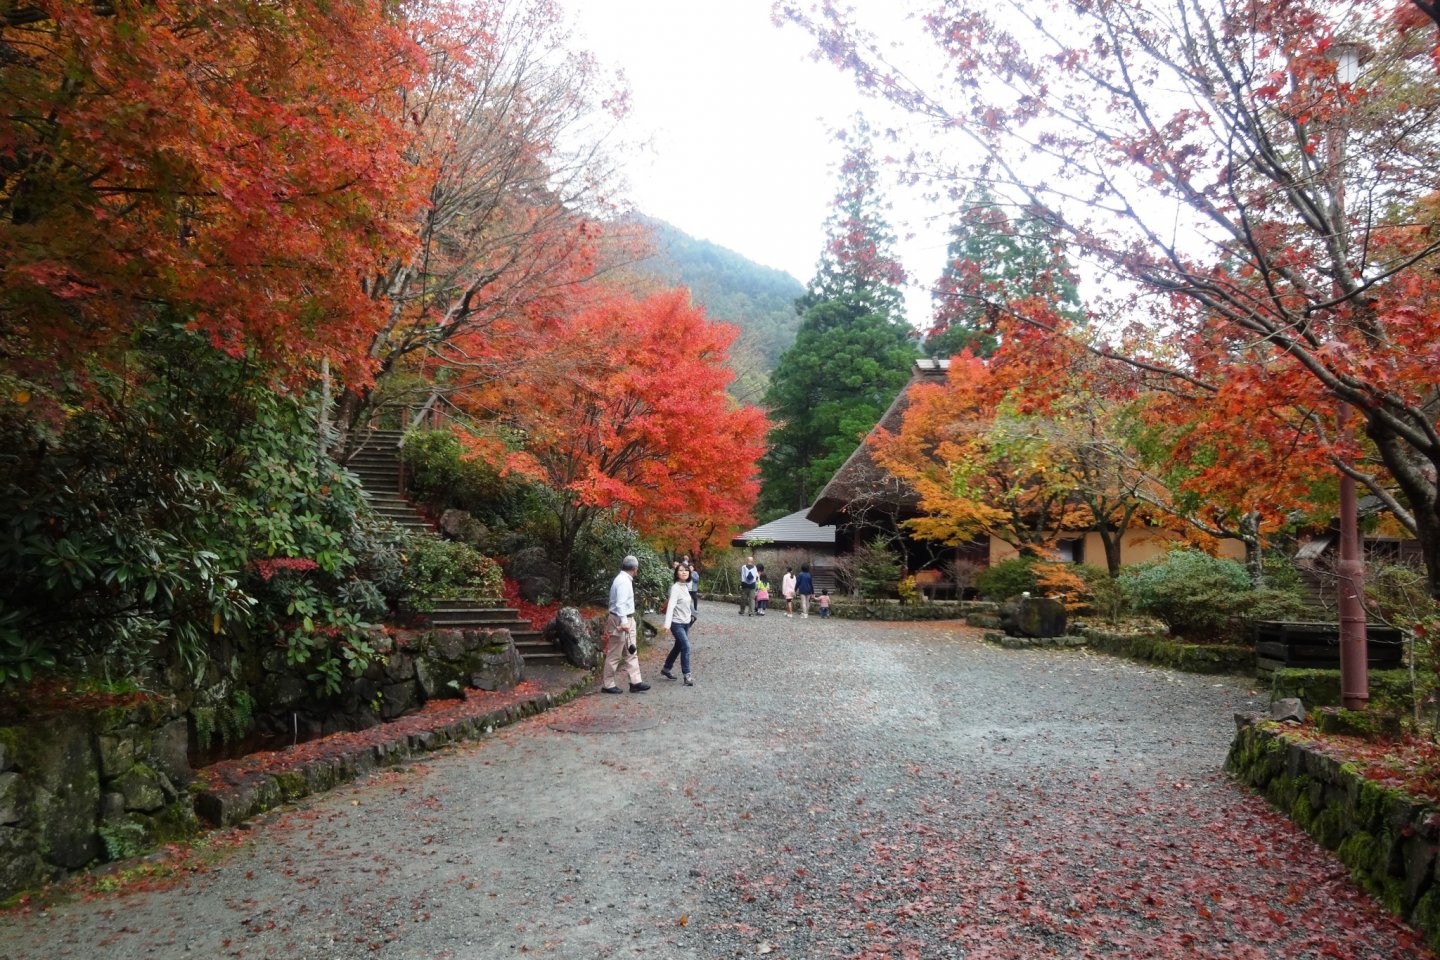 The entrance to Heike no Sato folk village